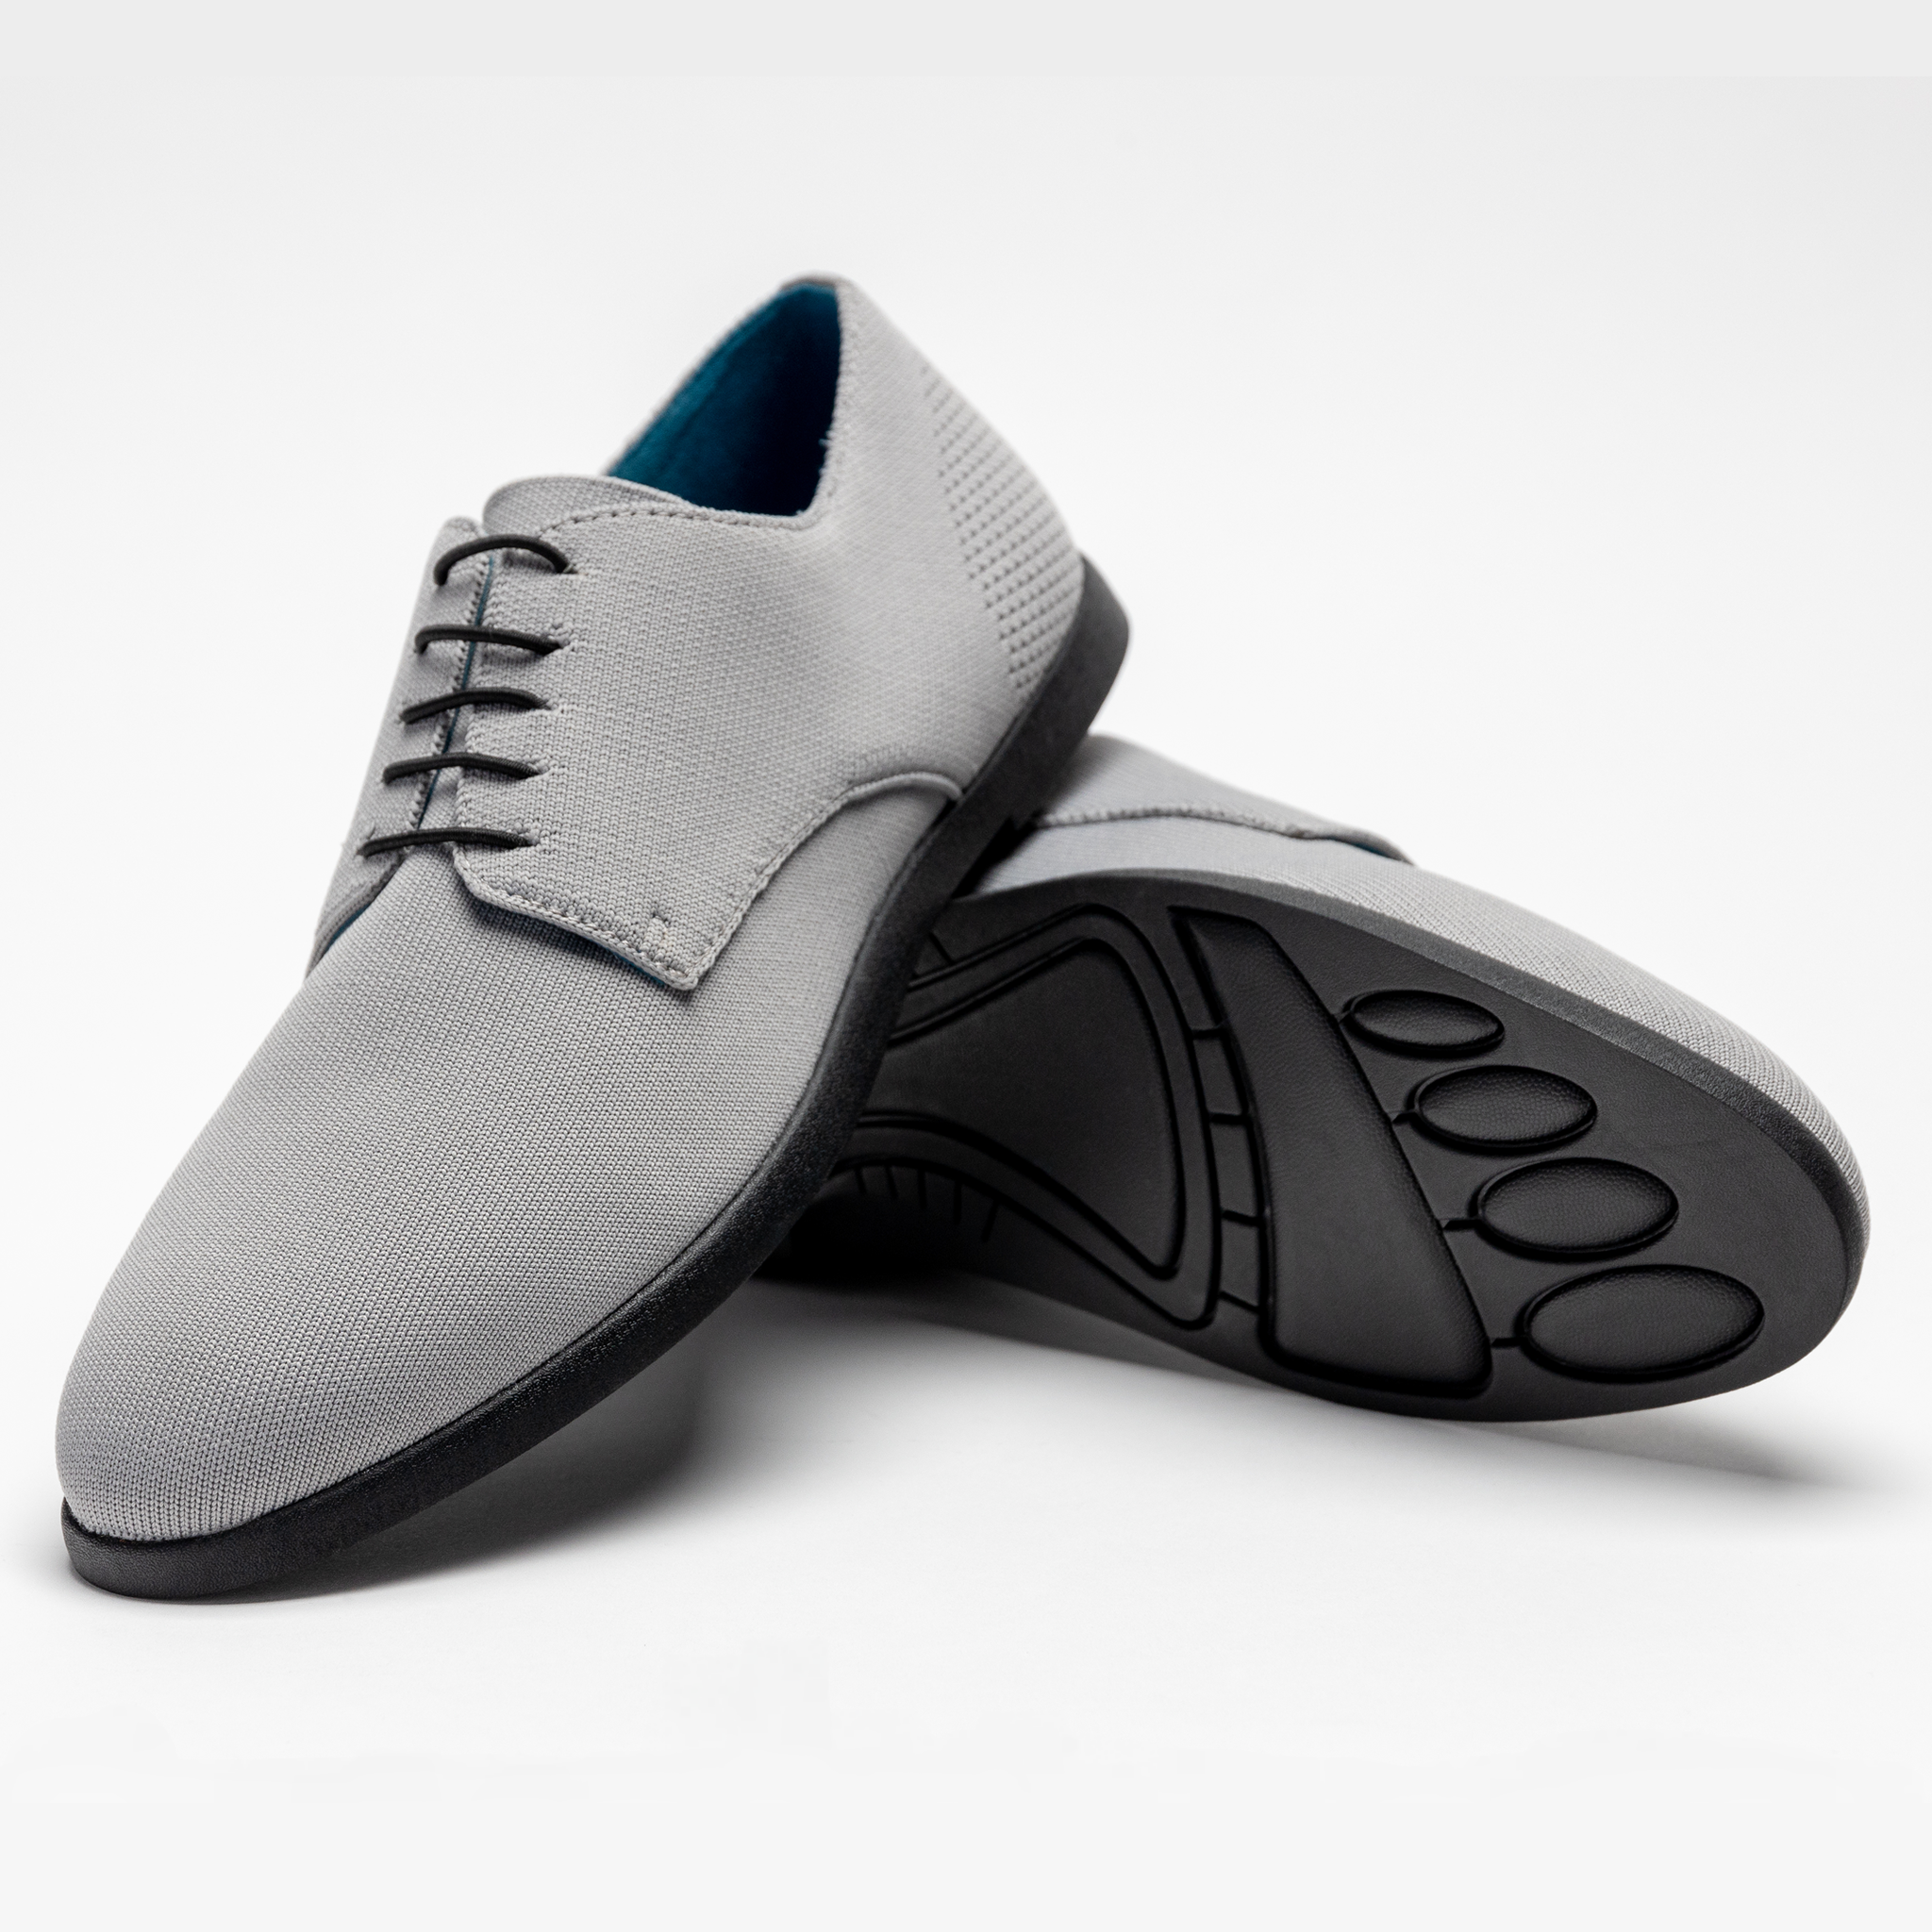 OAKA | Barefoot Dress Shoe for Men.  Comfortable, Zero Drop, and Travel Friendly.